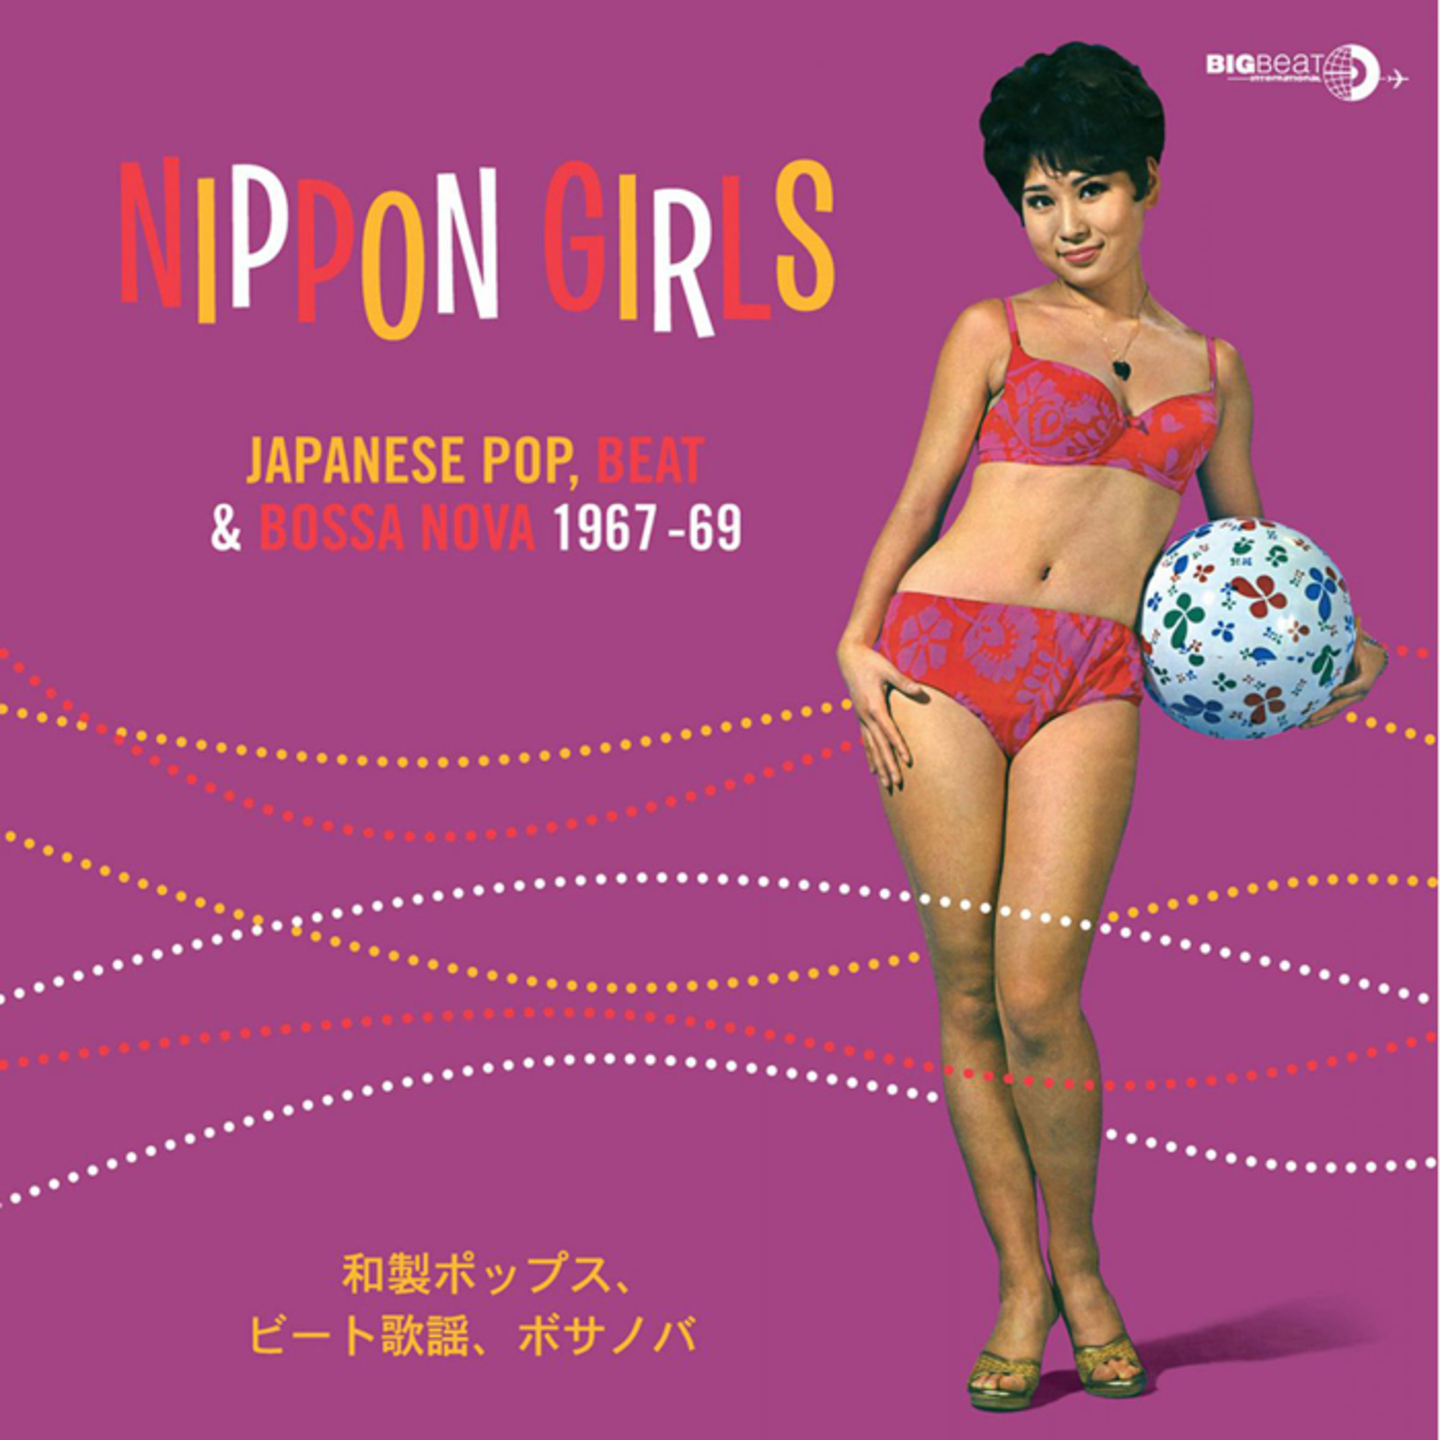 VA - Nippon Girls Japanese Pop, Beat & Bossa Nova 1967-69 Purple vinyl